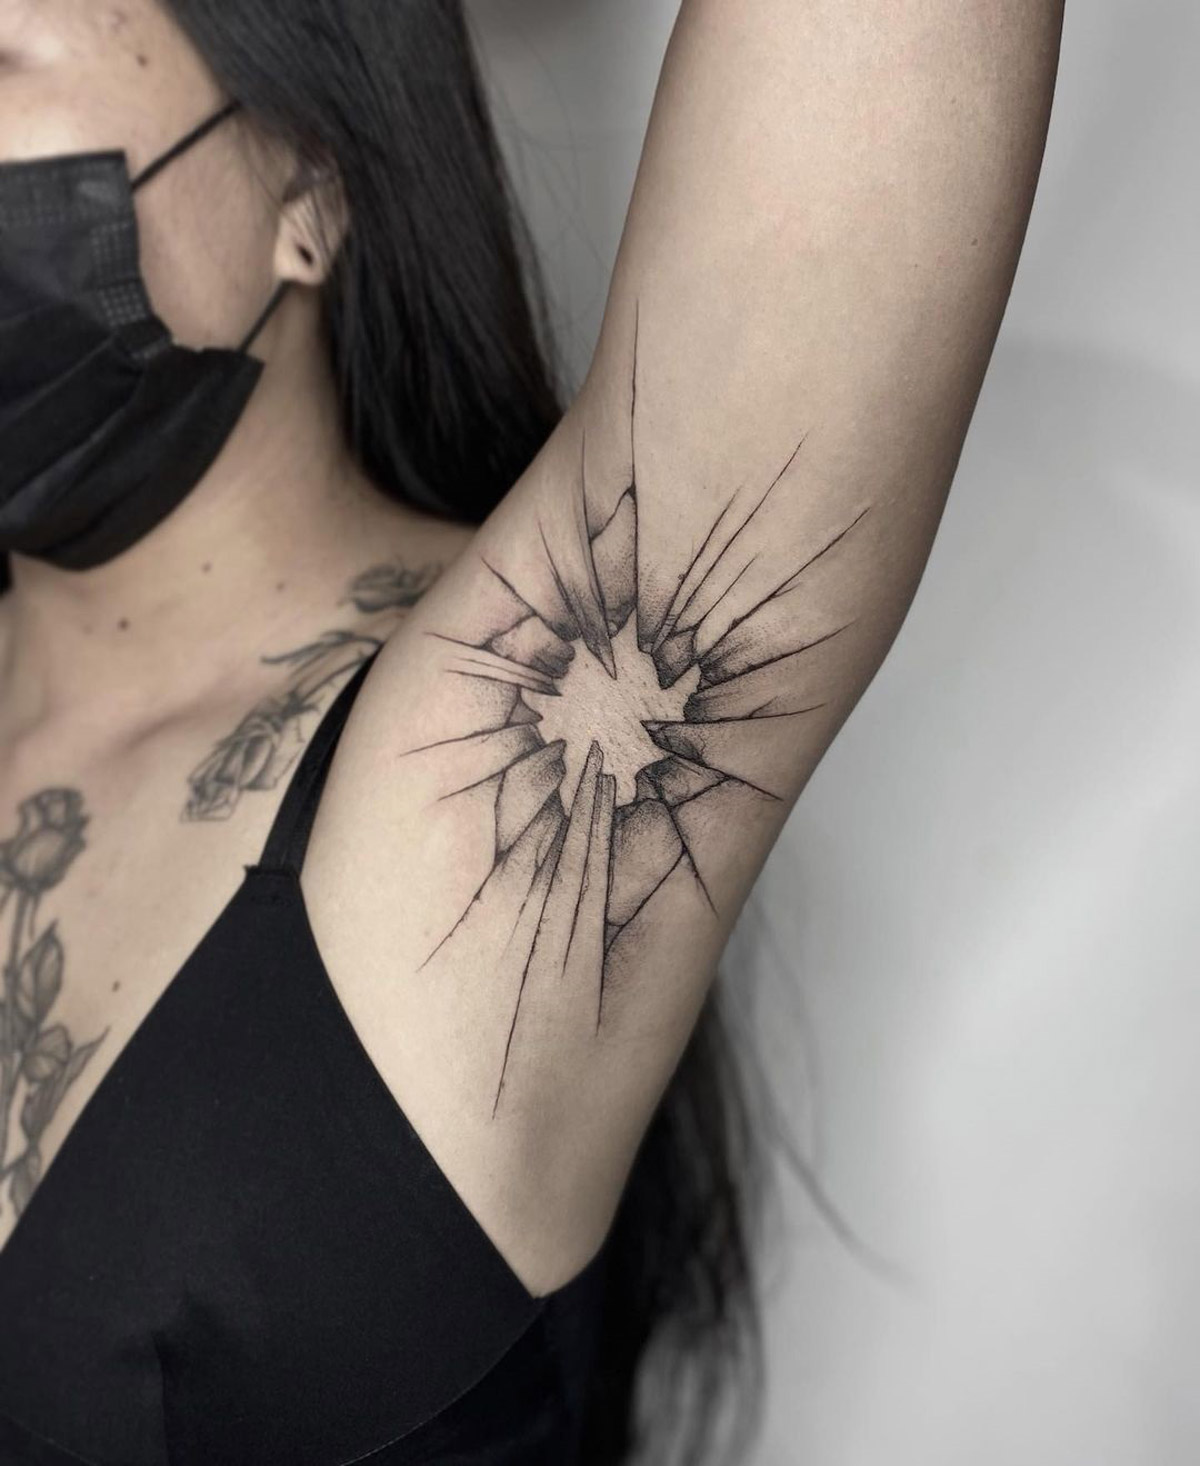 Shattered Glass Armpit Tattoo | Best Tattoo Ideas For Men & Women